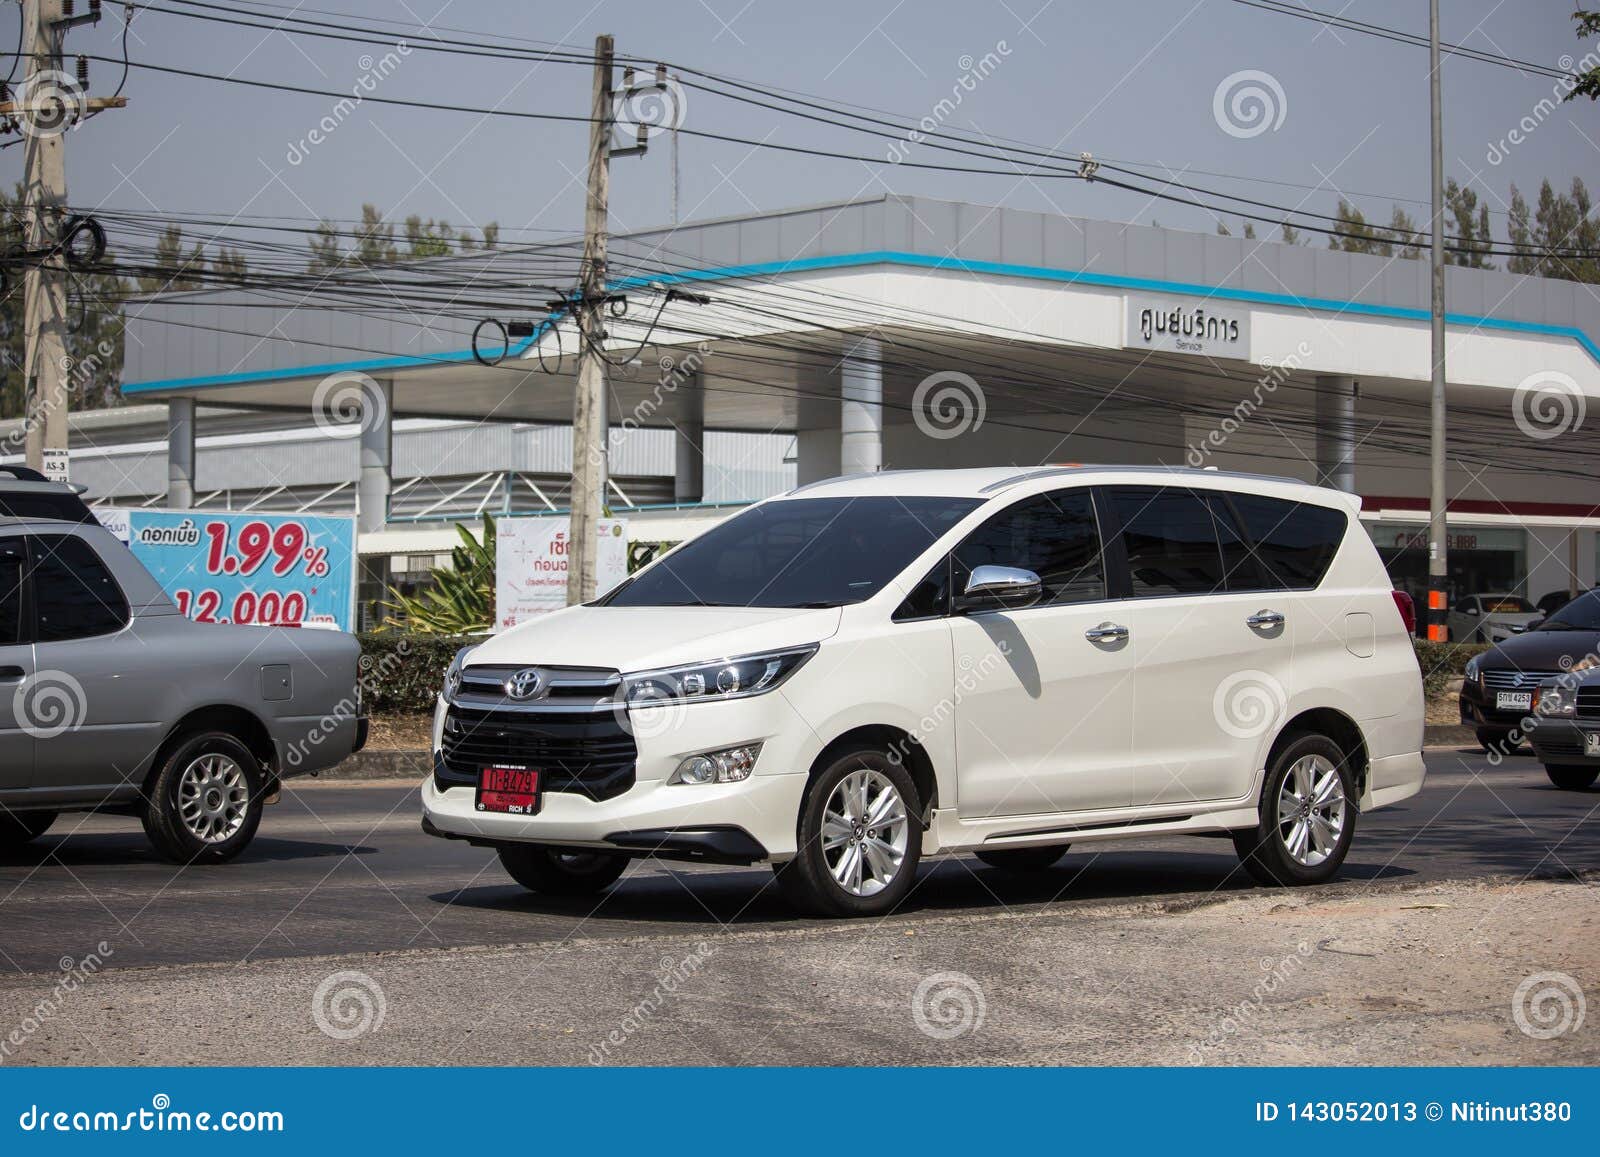 New Toyota Innova Crysta Editorial Stock Photo Image Of Road